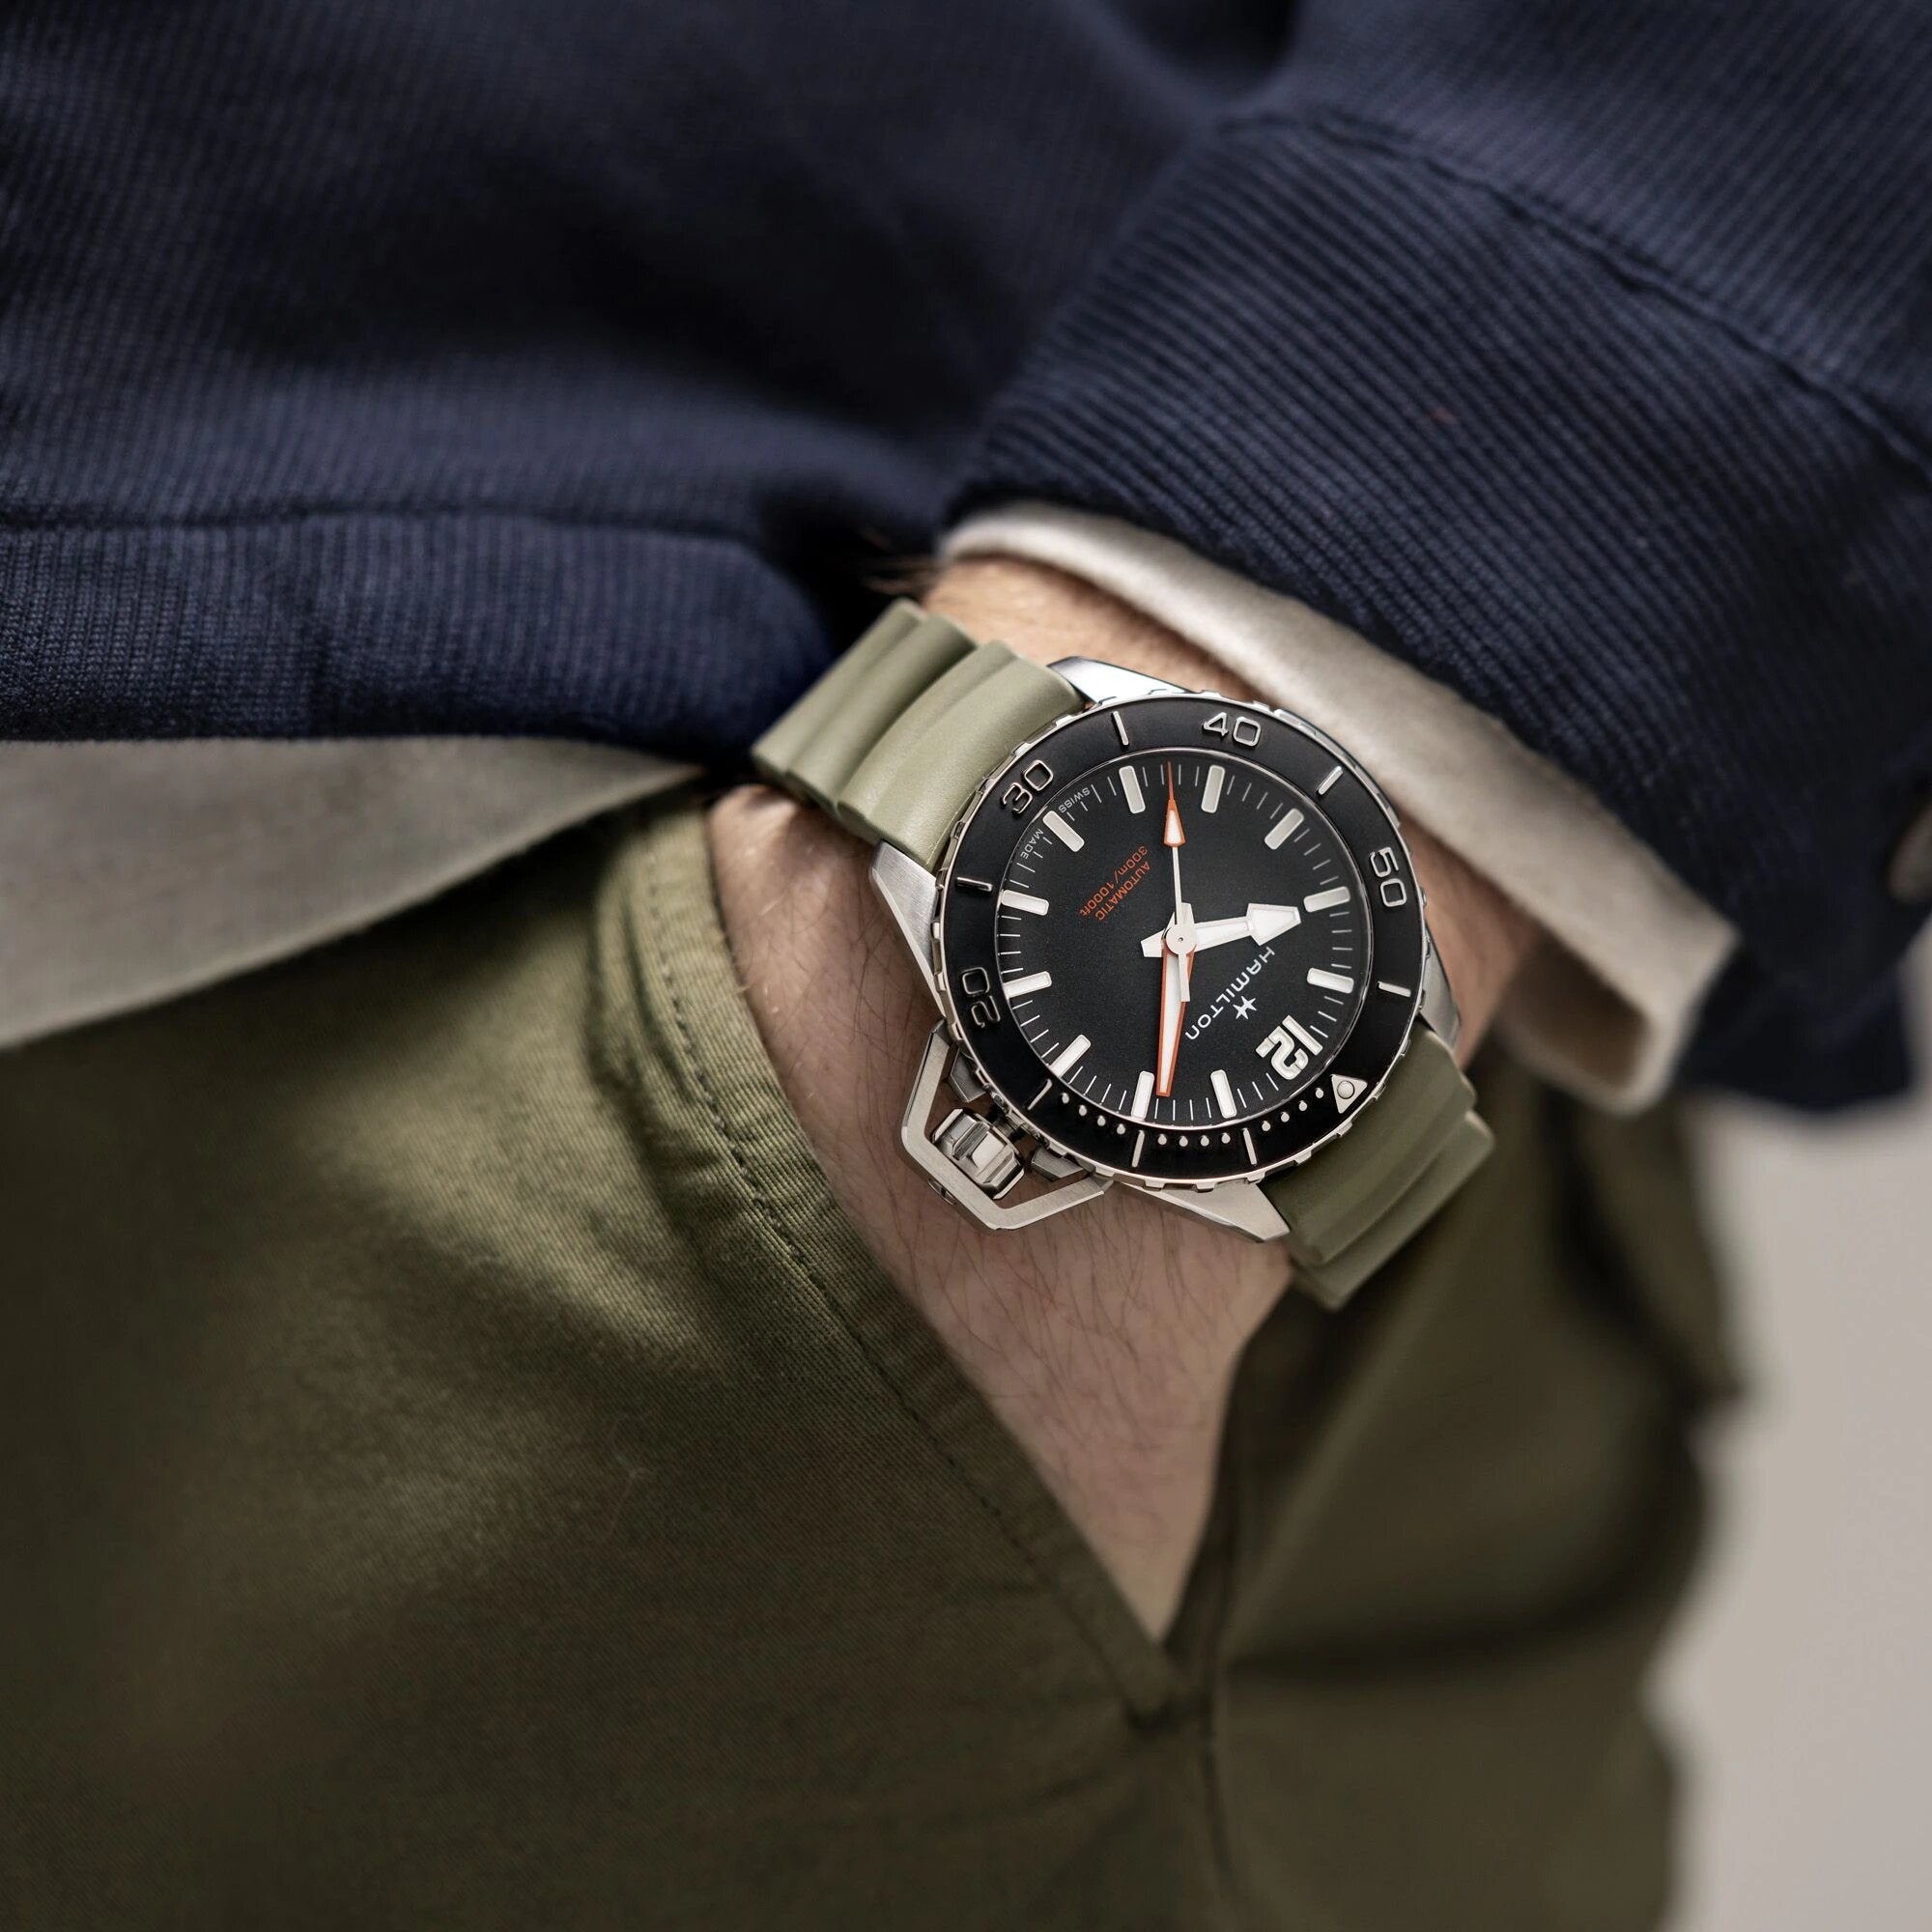 Hamilton Khaki Navy Frogman Automatic Men's Watch H77825331